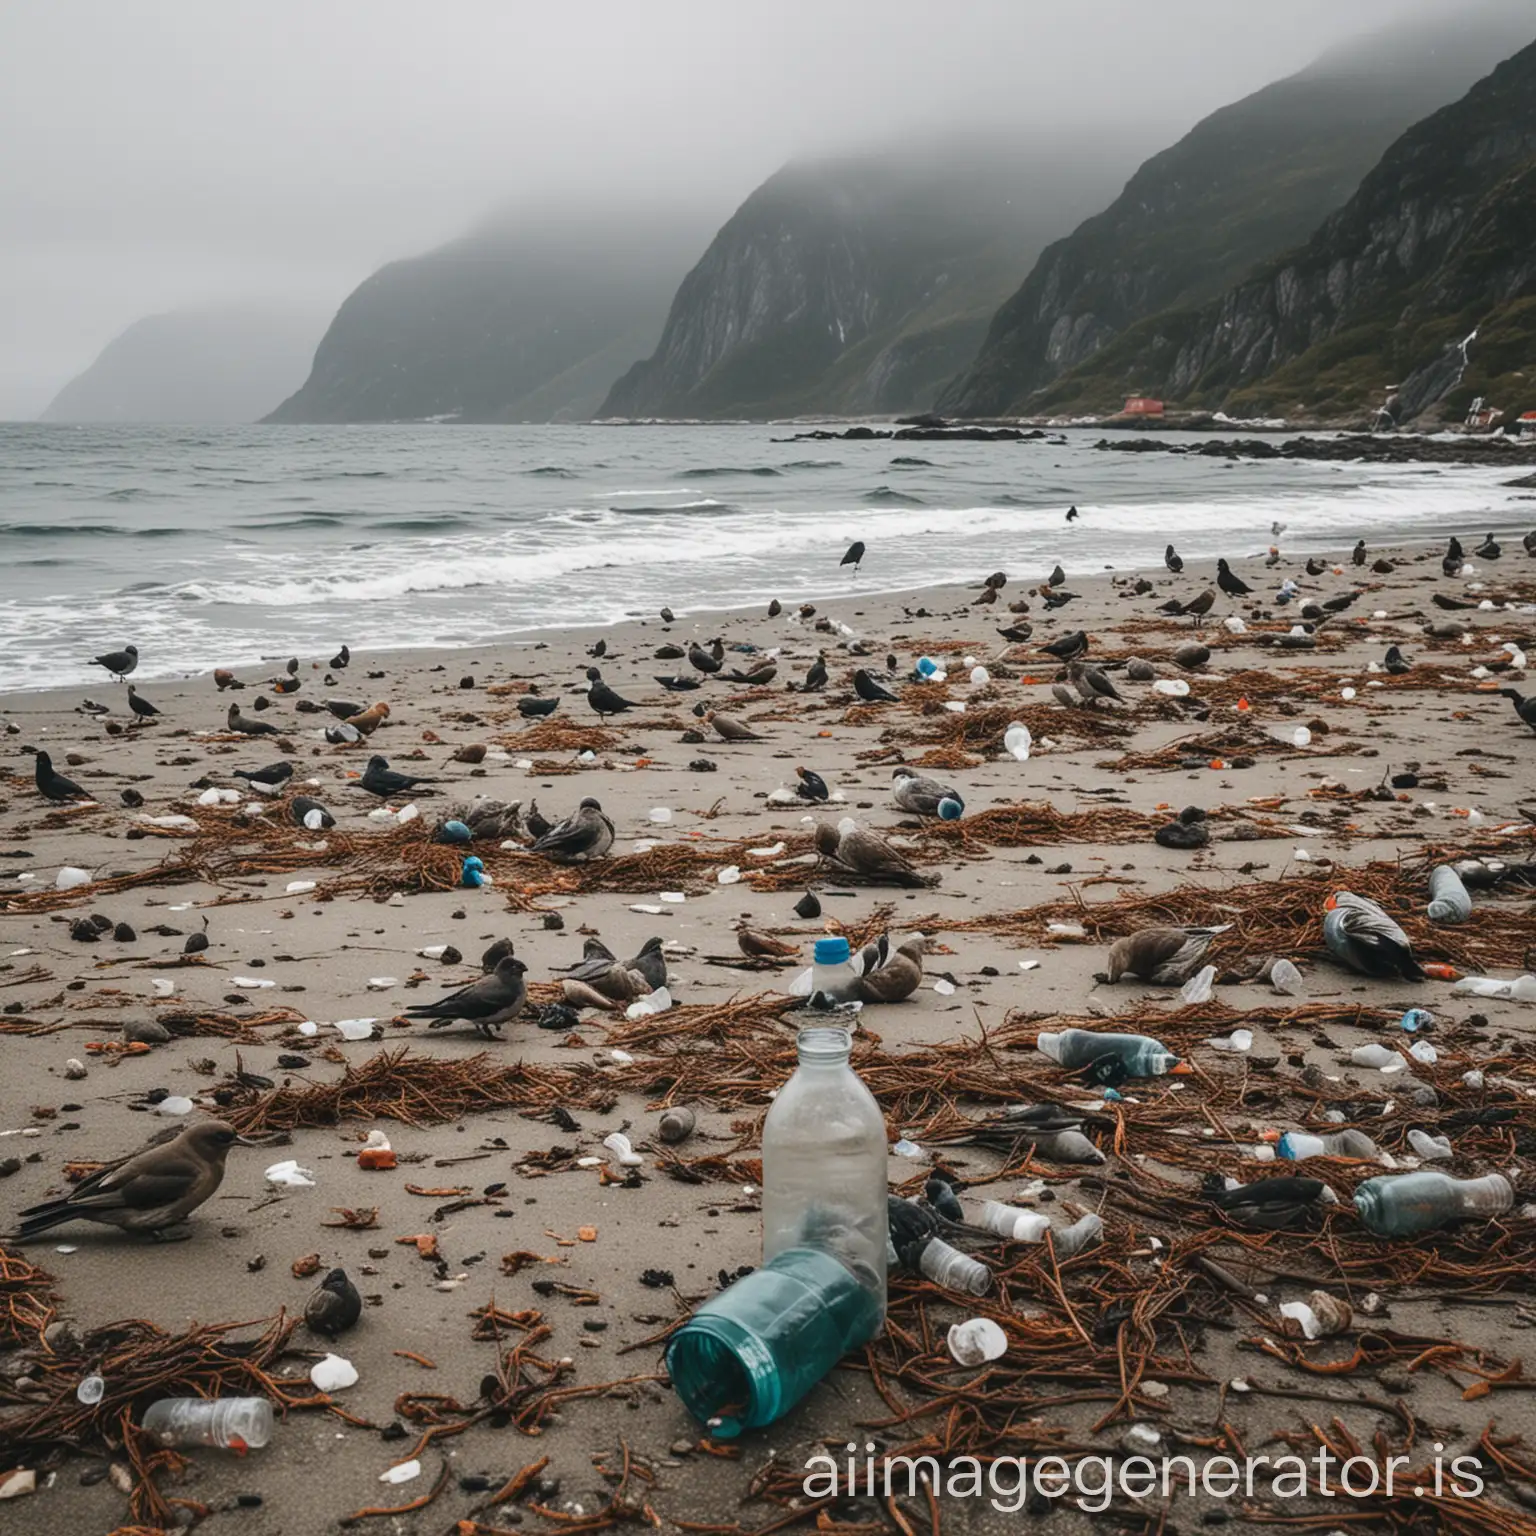 Norwegian-Beach-Scene-with-Plastic-Pollution-and-Birds